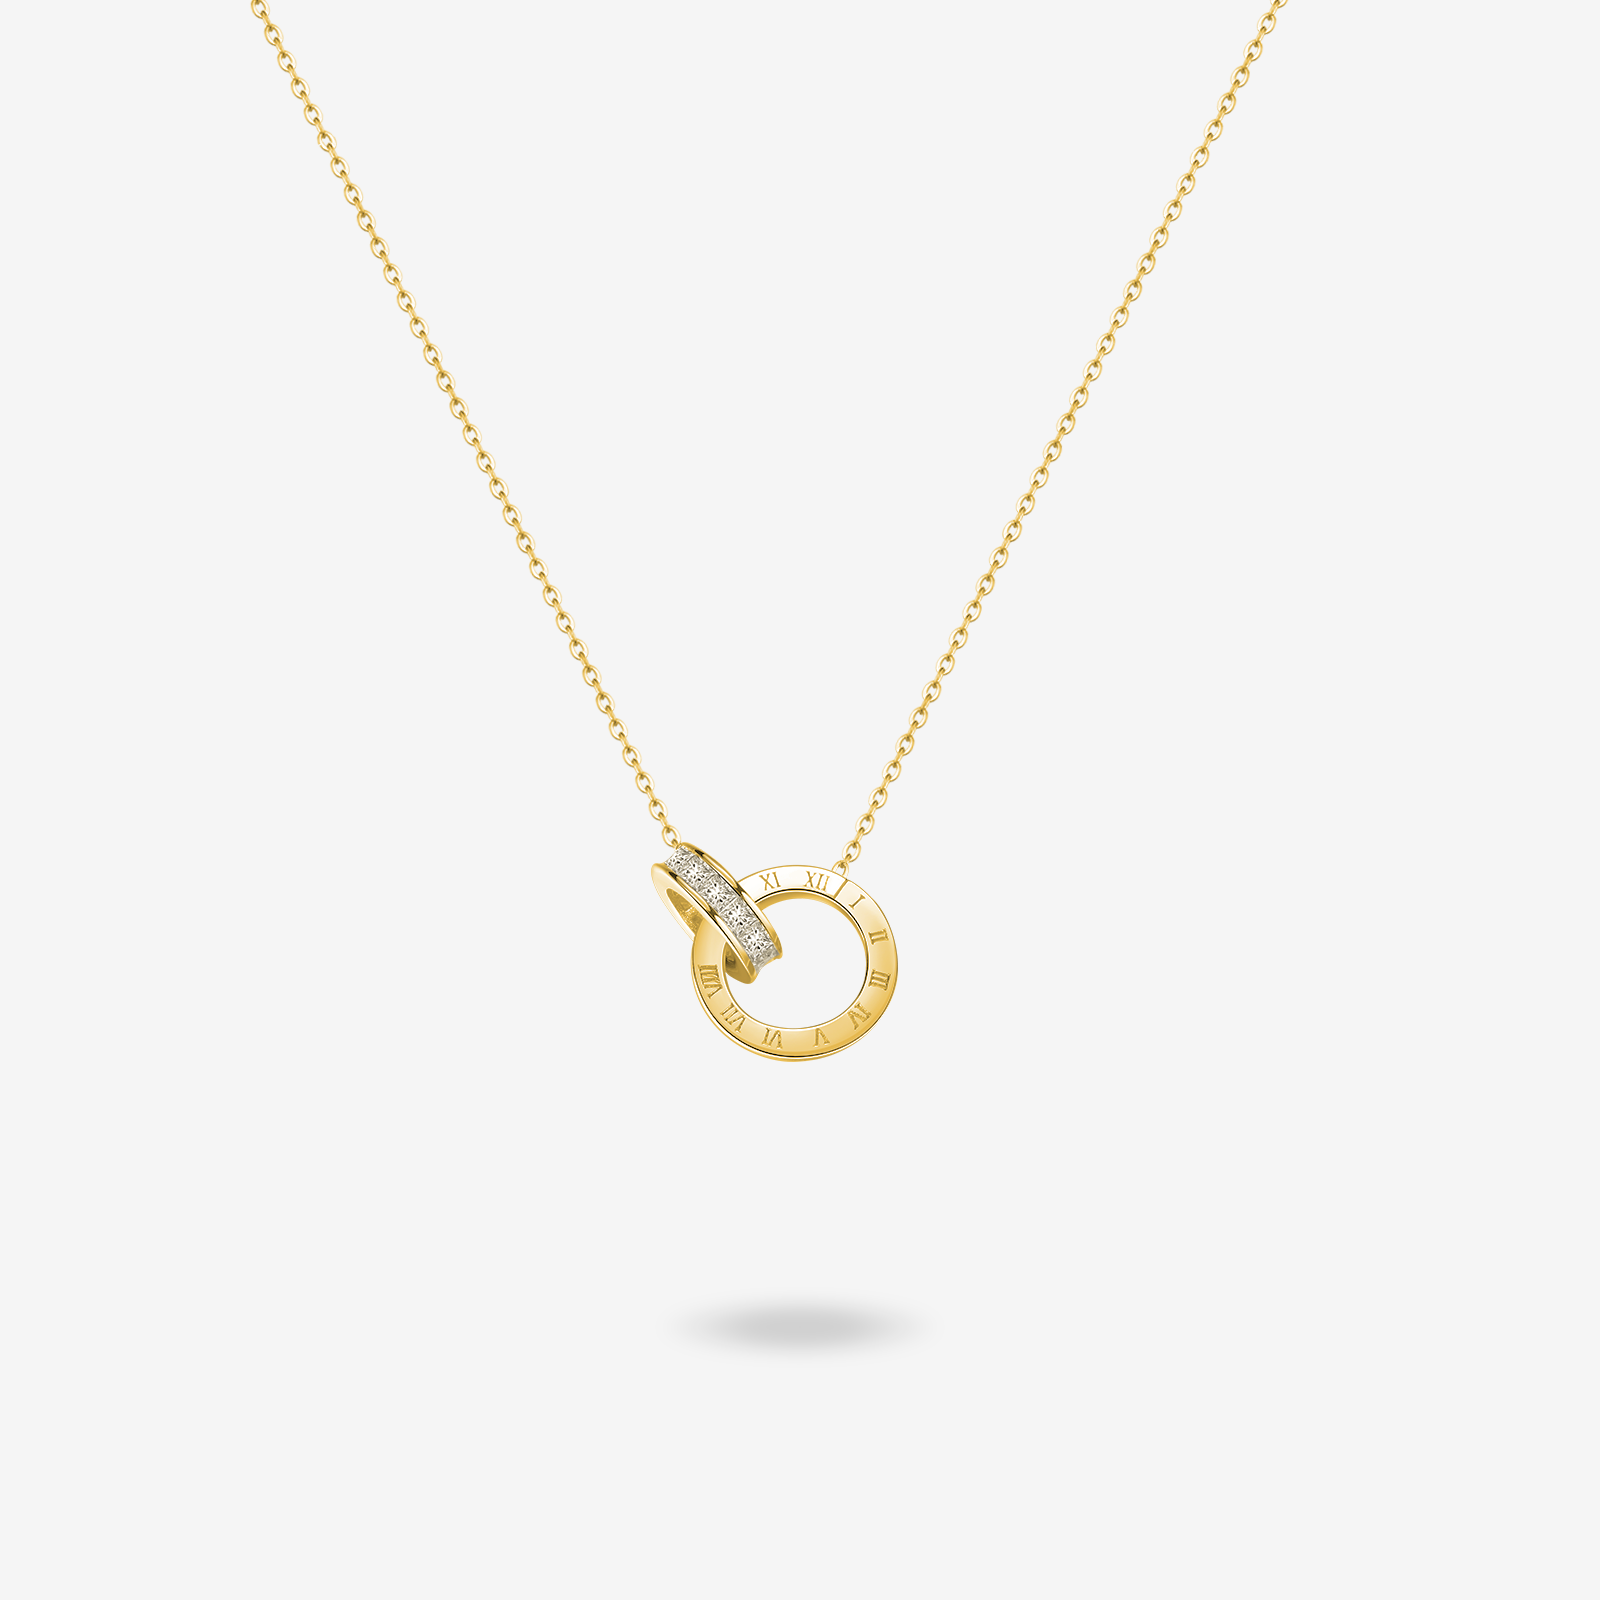 FANCIME "Roman Time" Interlocking Circle Sterling Silver Necklace